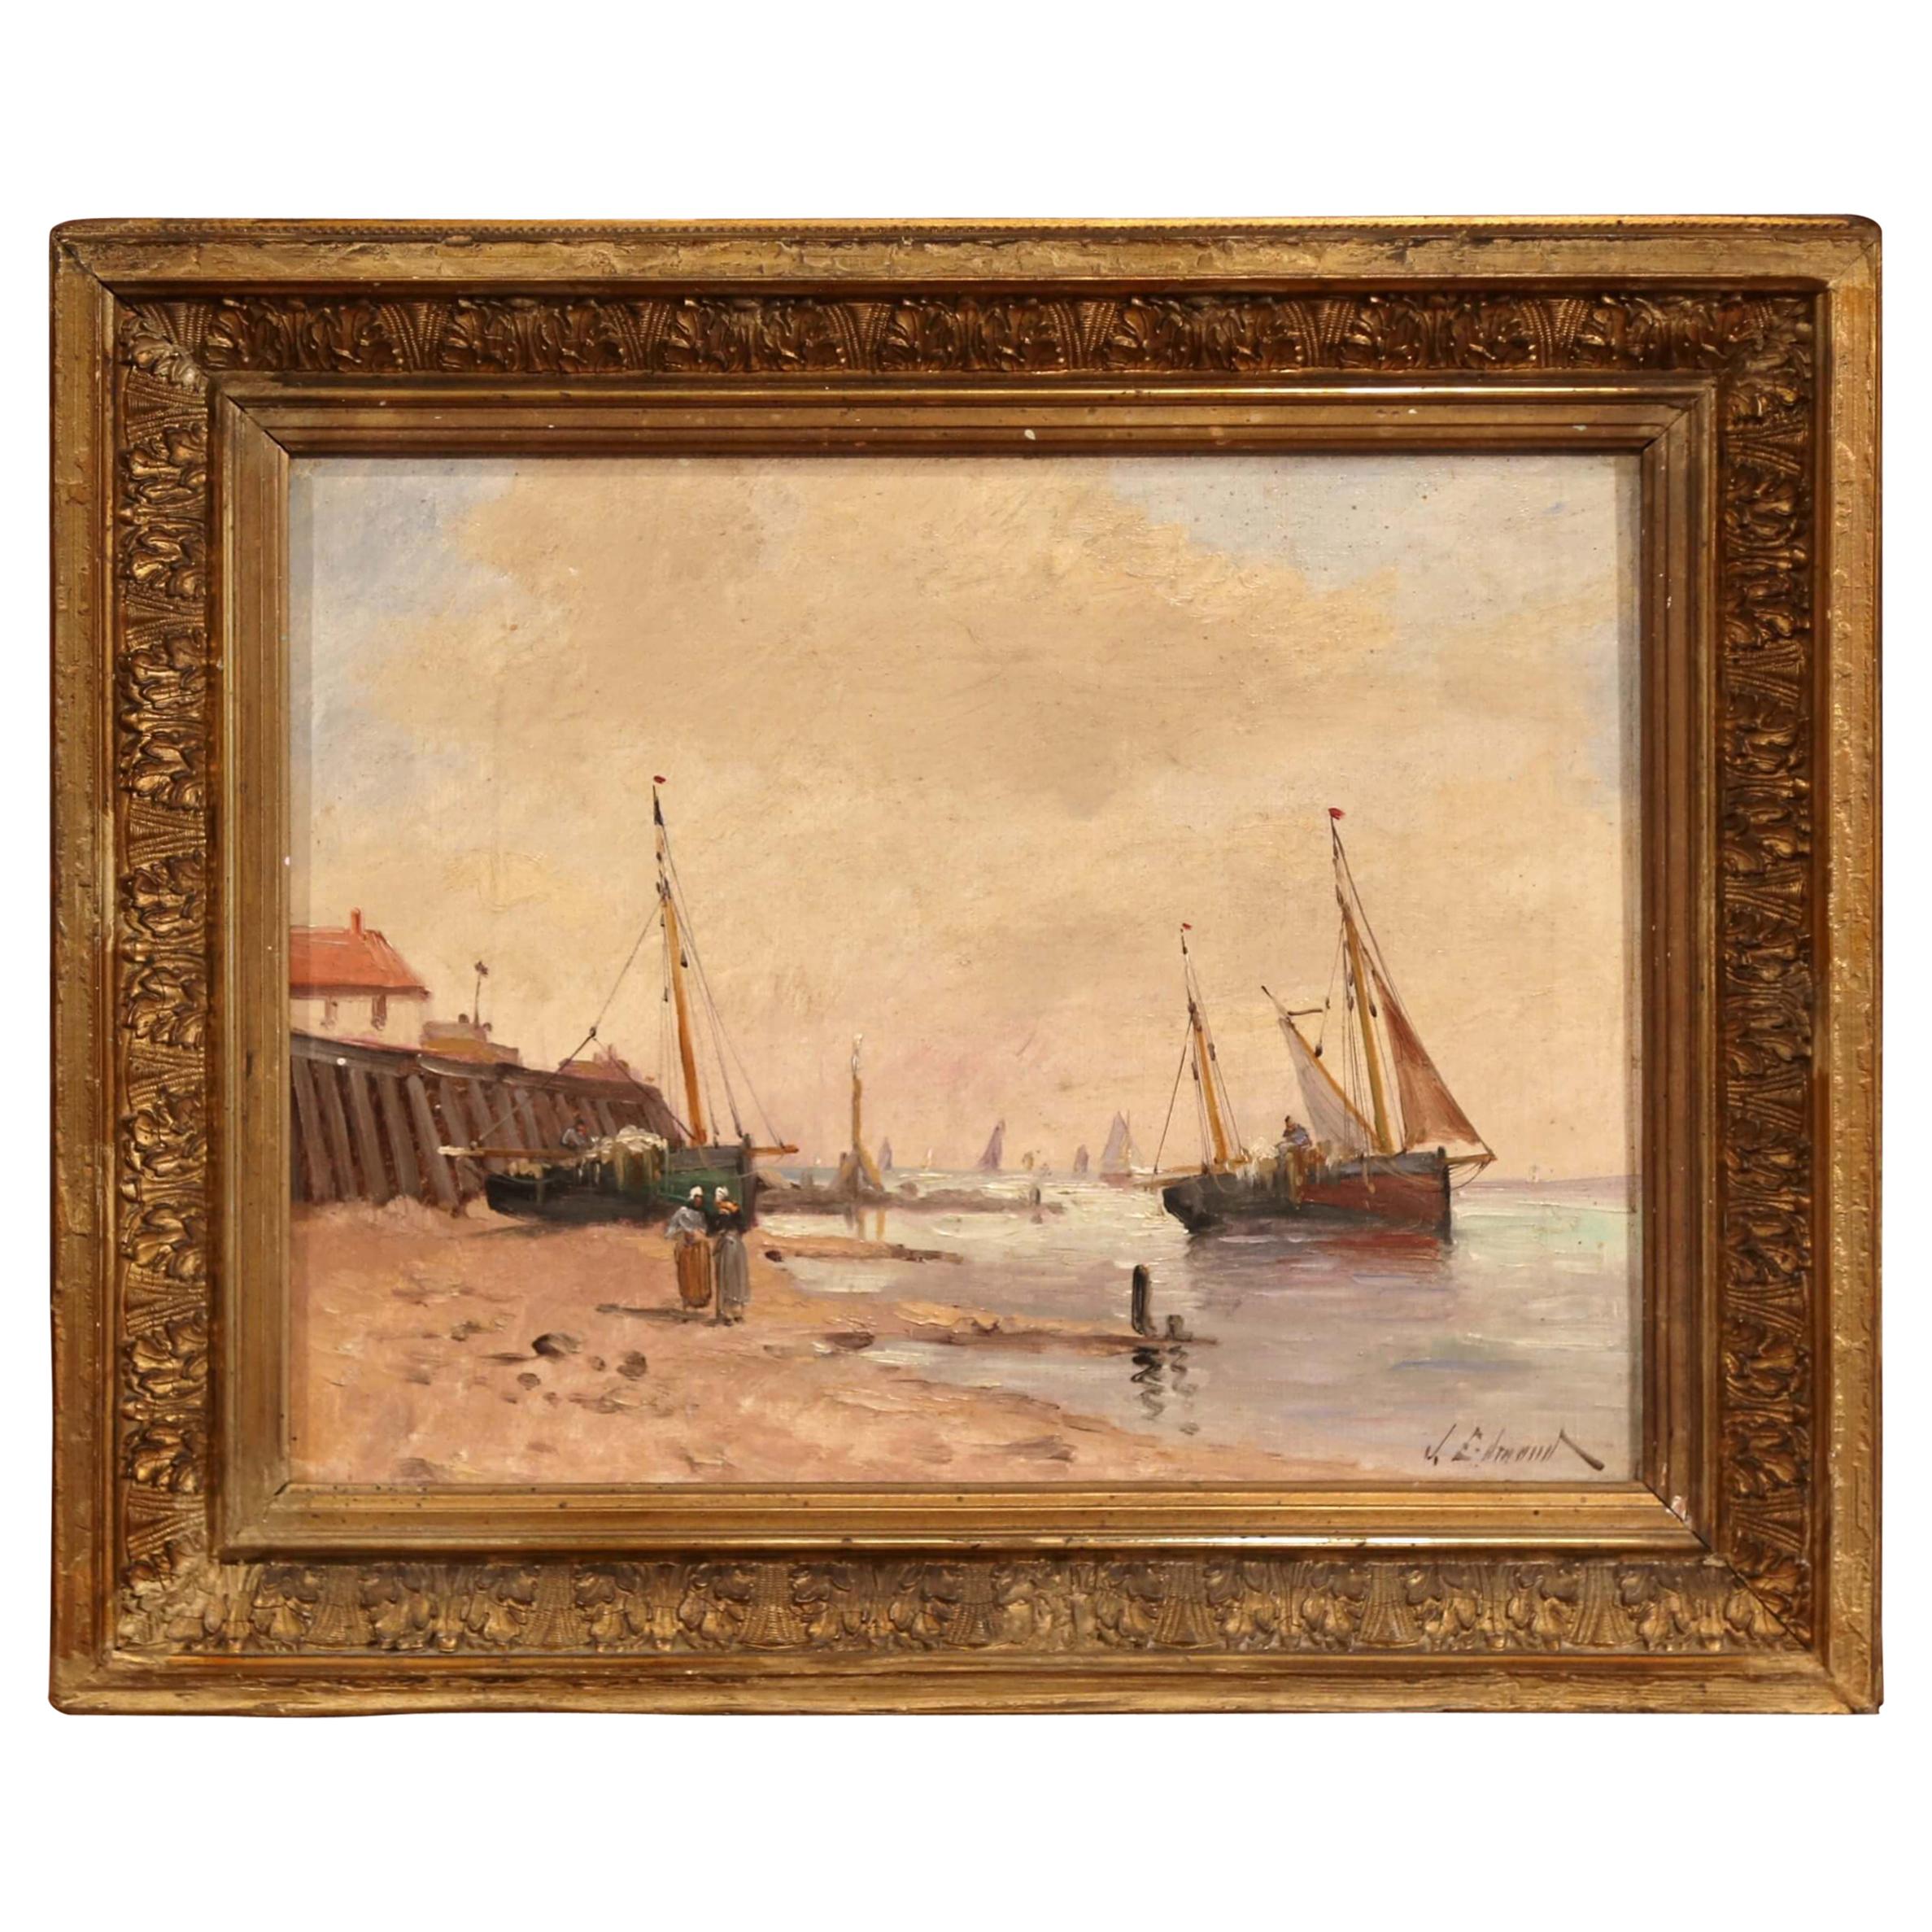 19th Century French Marine Scene Oil on Canvas Painting Signed J. Edmond